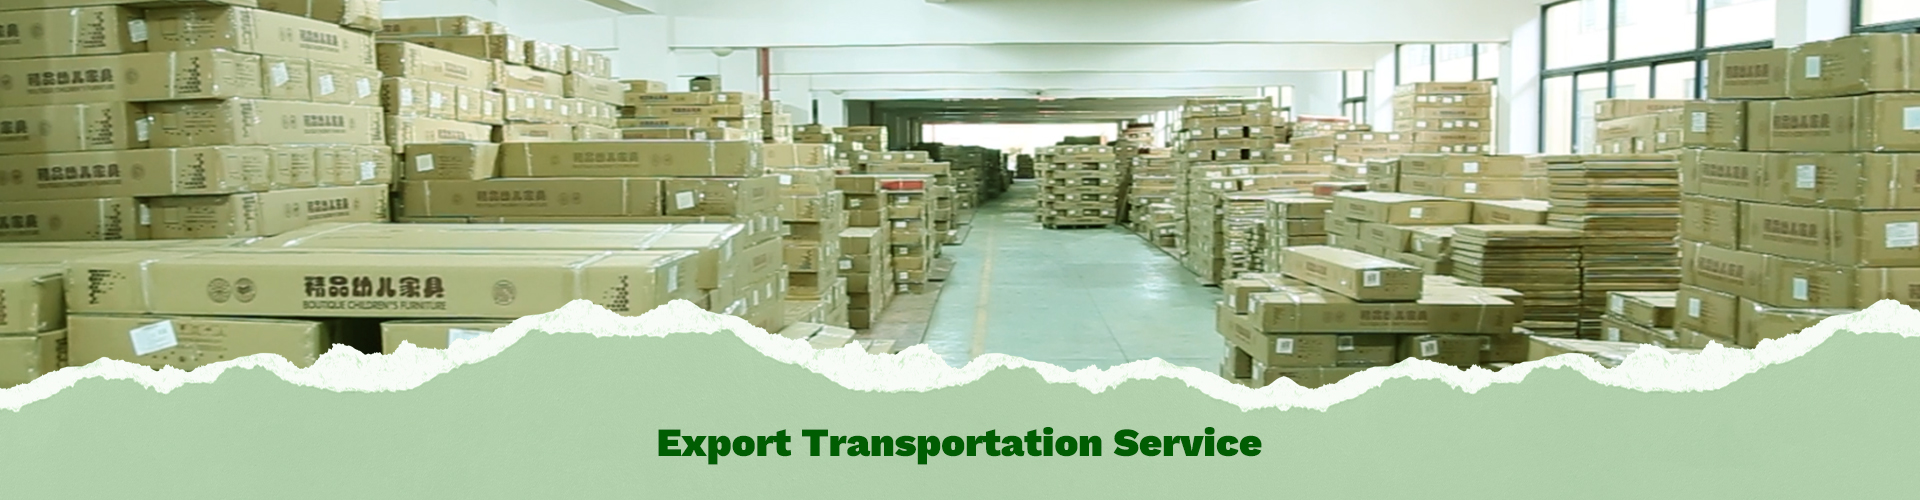 Export-Transportation-Service